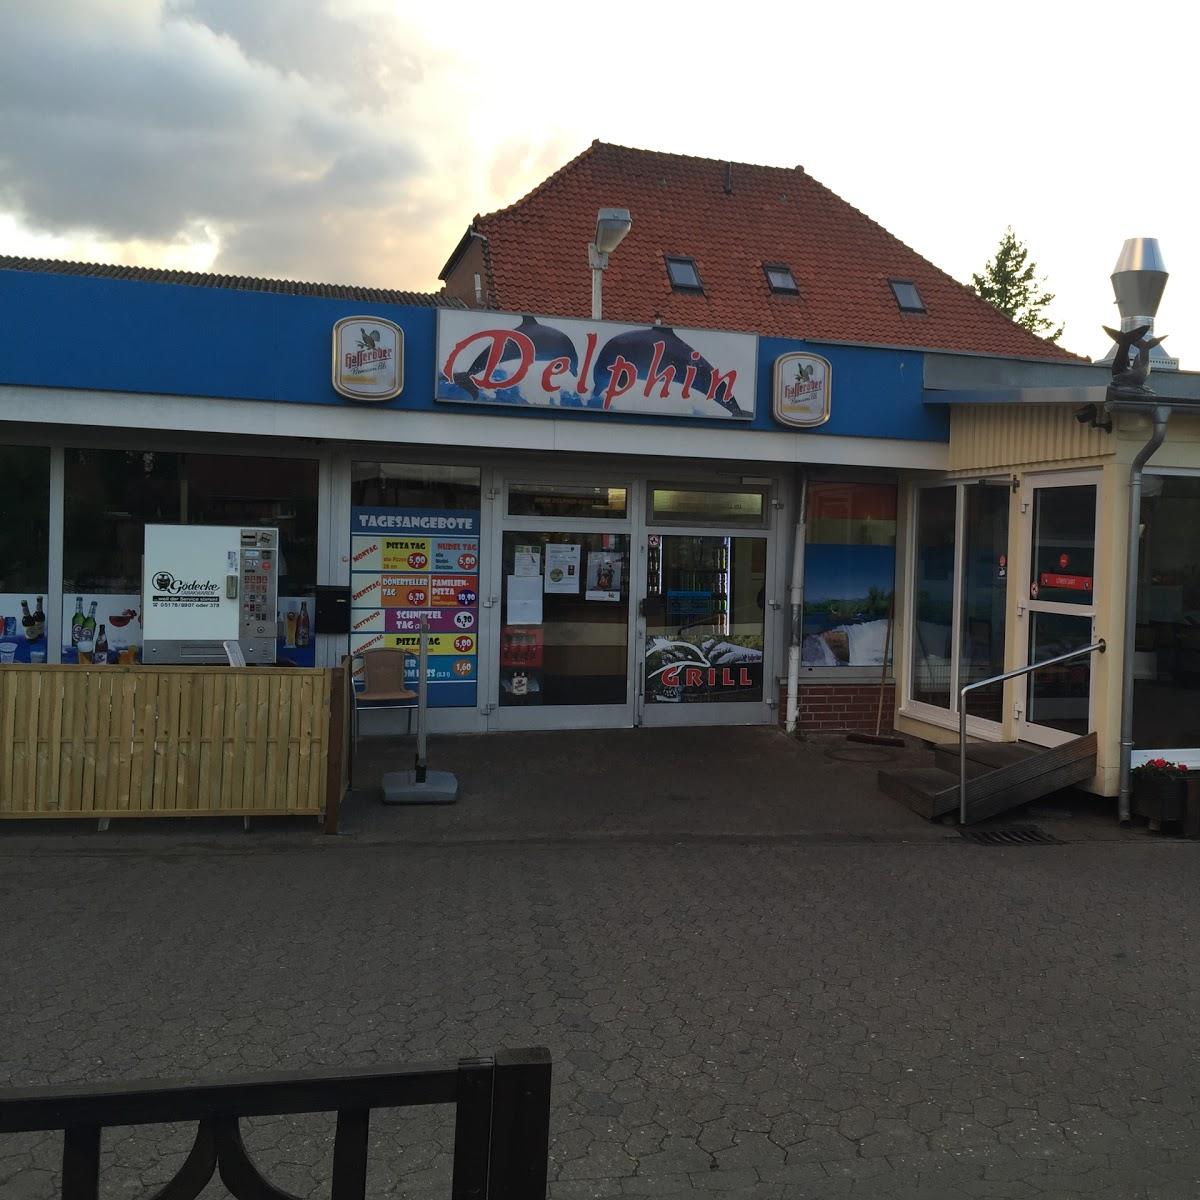 Restaurant "Delphin Grill" in Hohenhameln